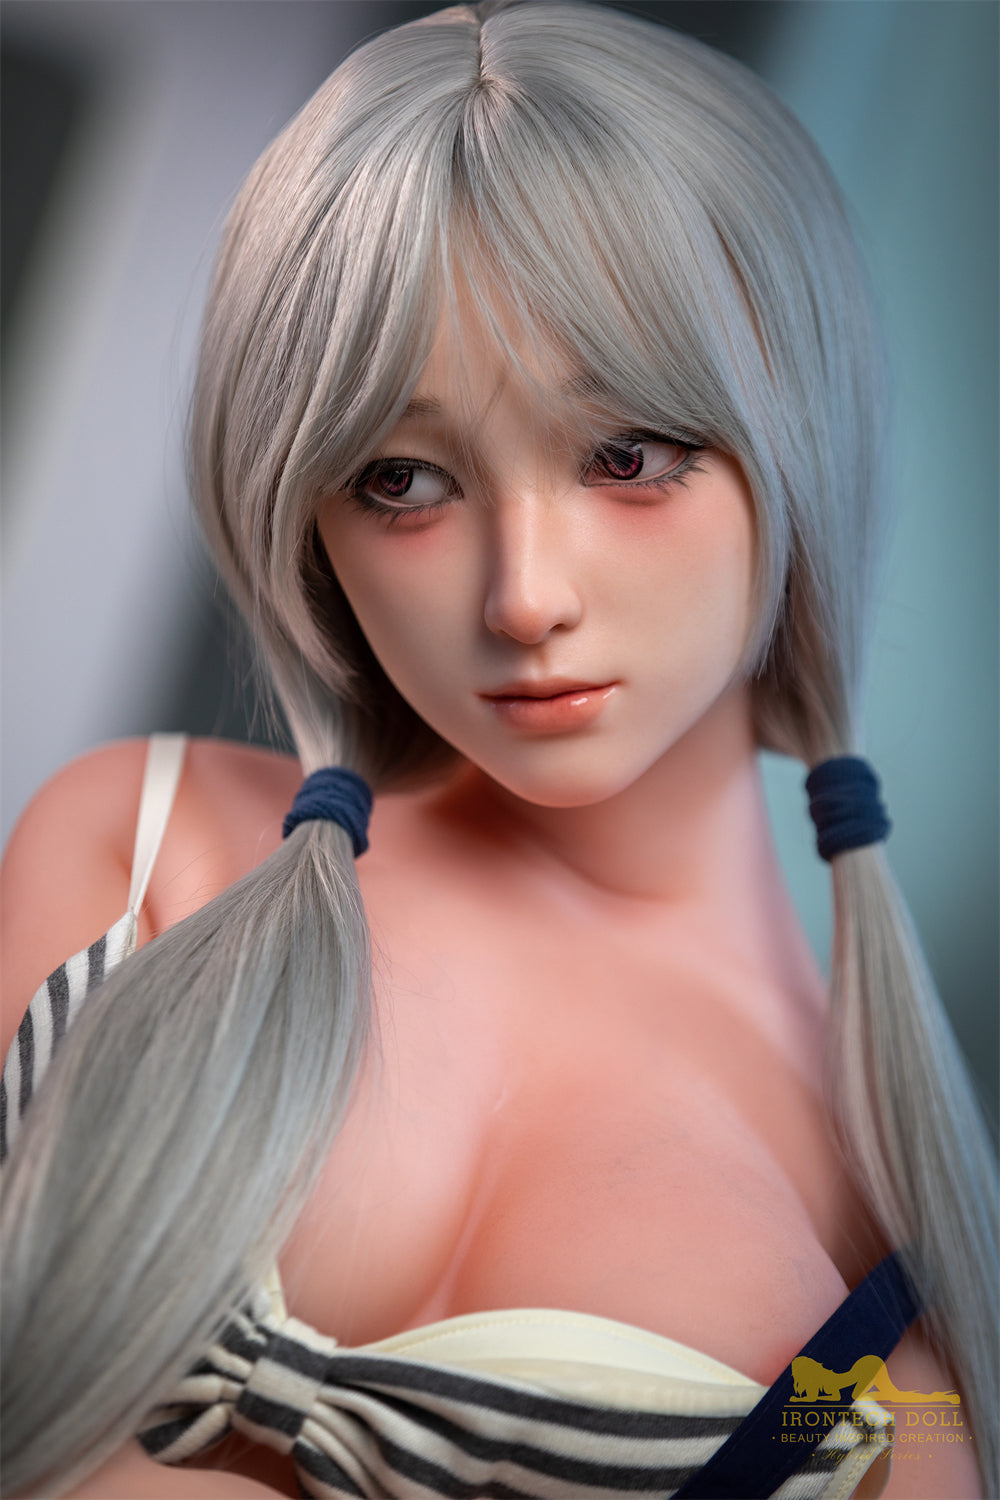 Irontech Doll 154 cm F Fusion - Miyuki | Buy Sex Dolls at DOLLS ACTUALLY